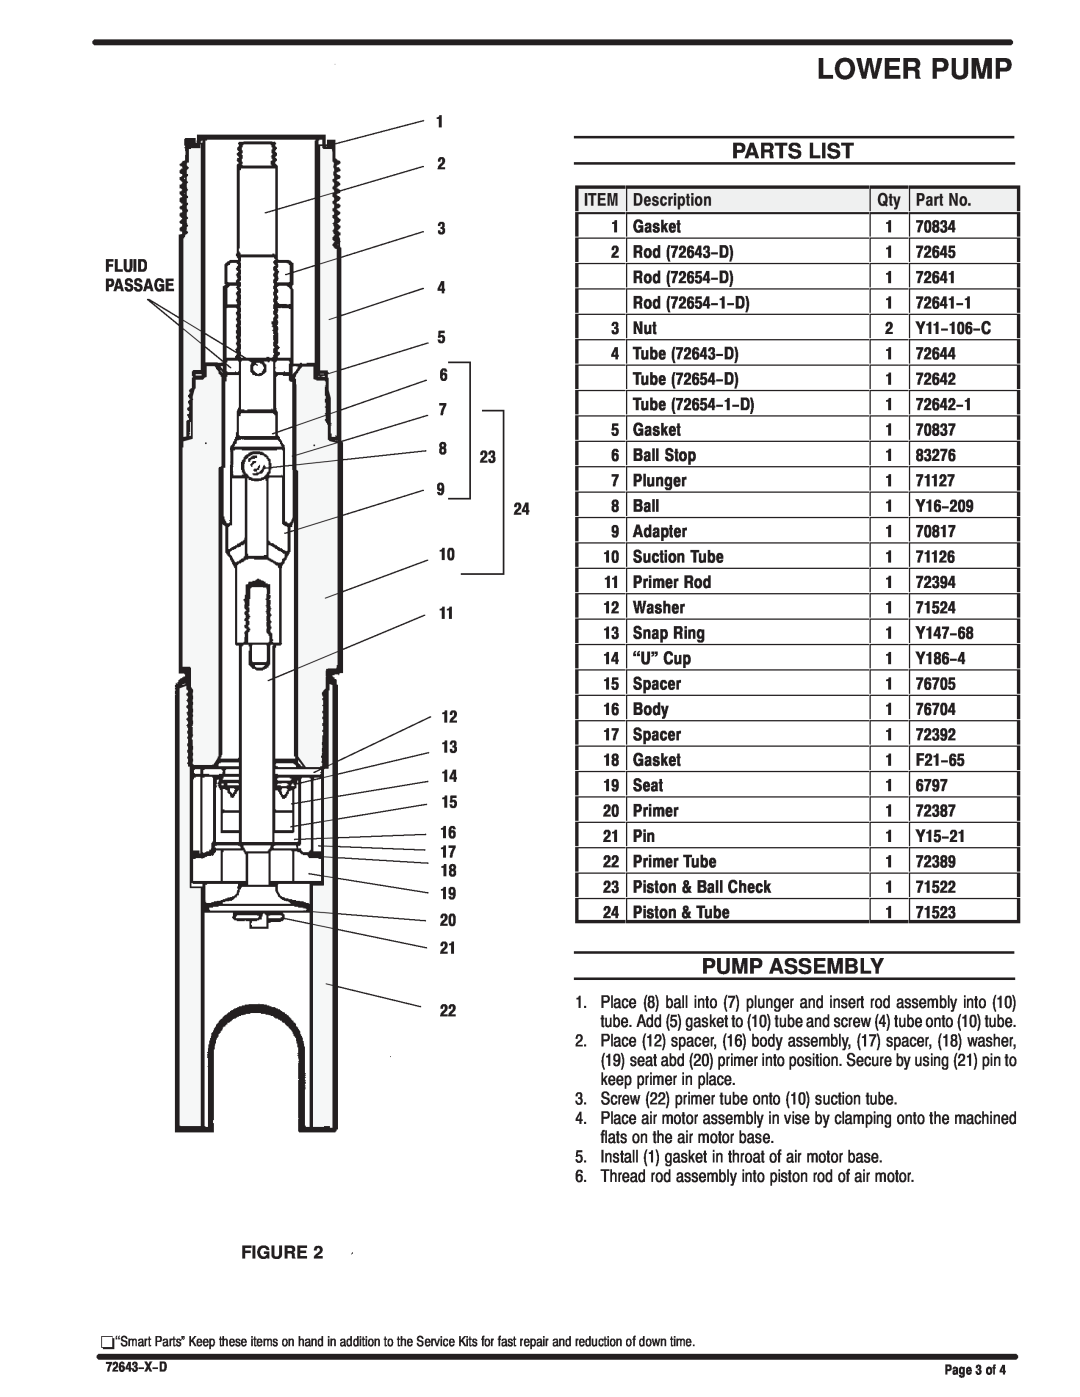 Ingersoll-Rand 72633-D manual Parts List, Pump Assembly, Lower Pump 